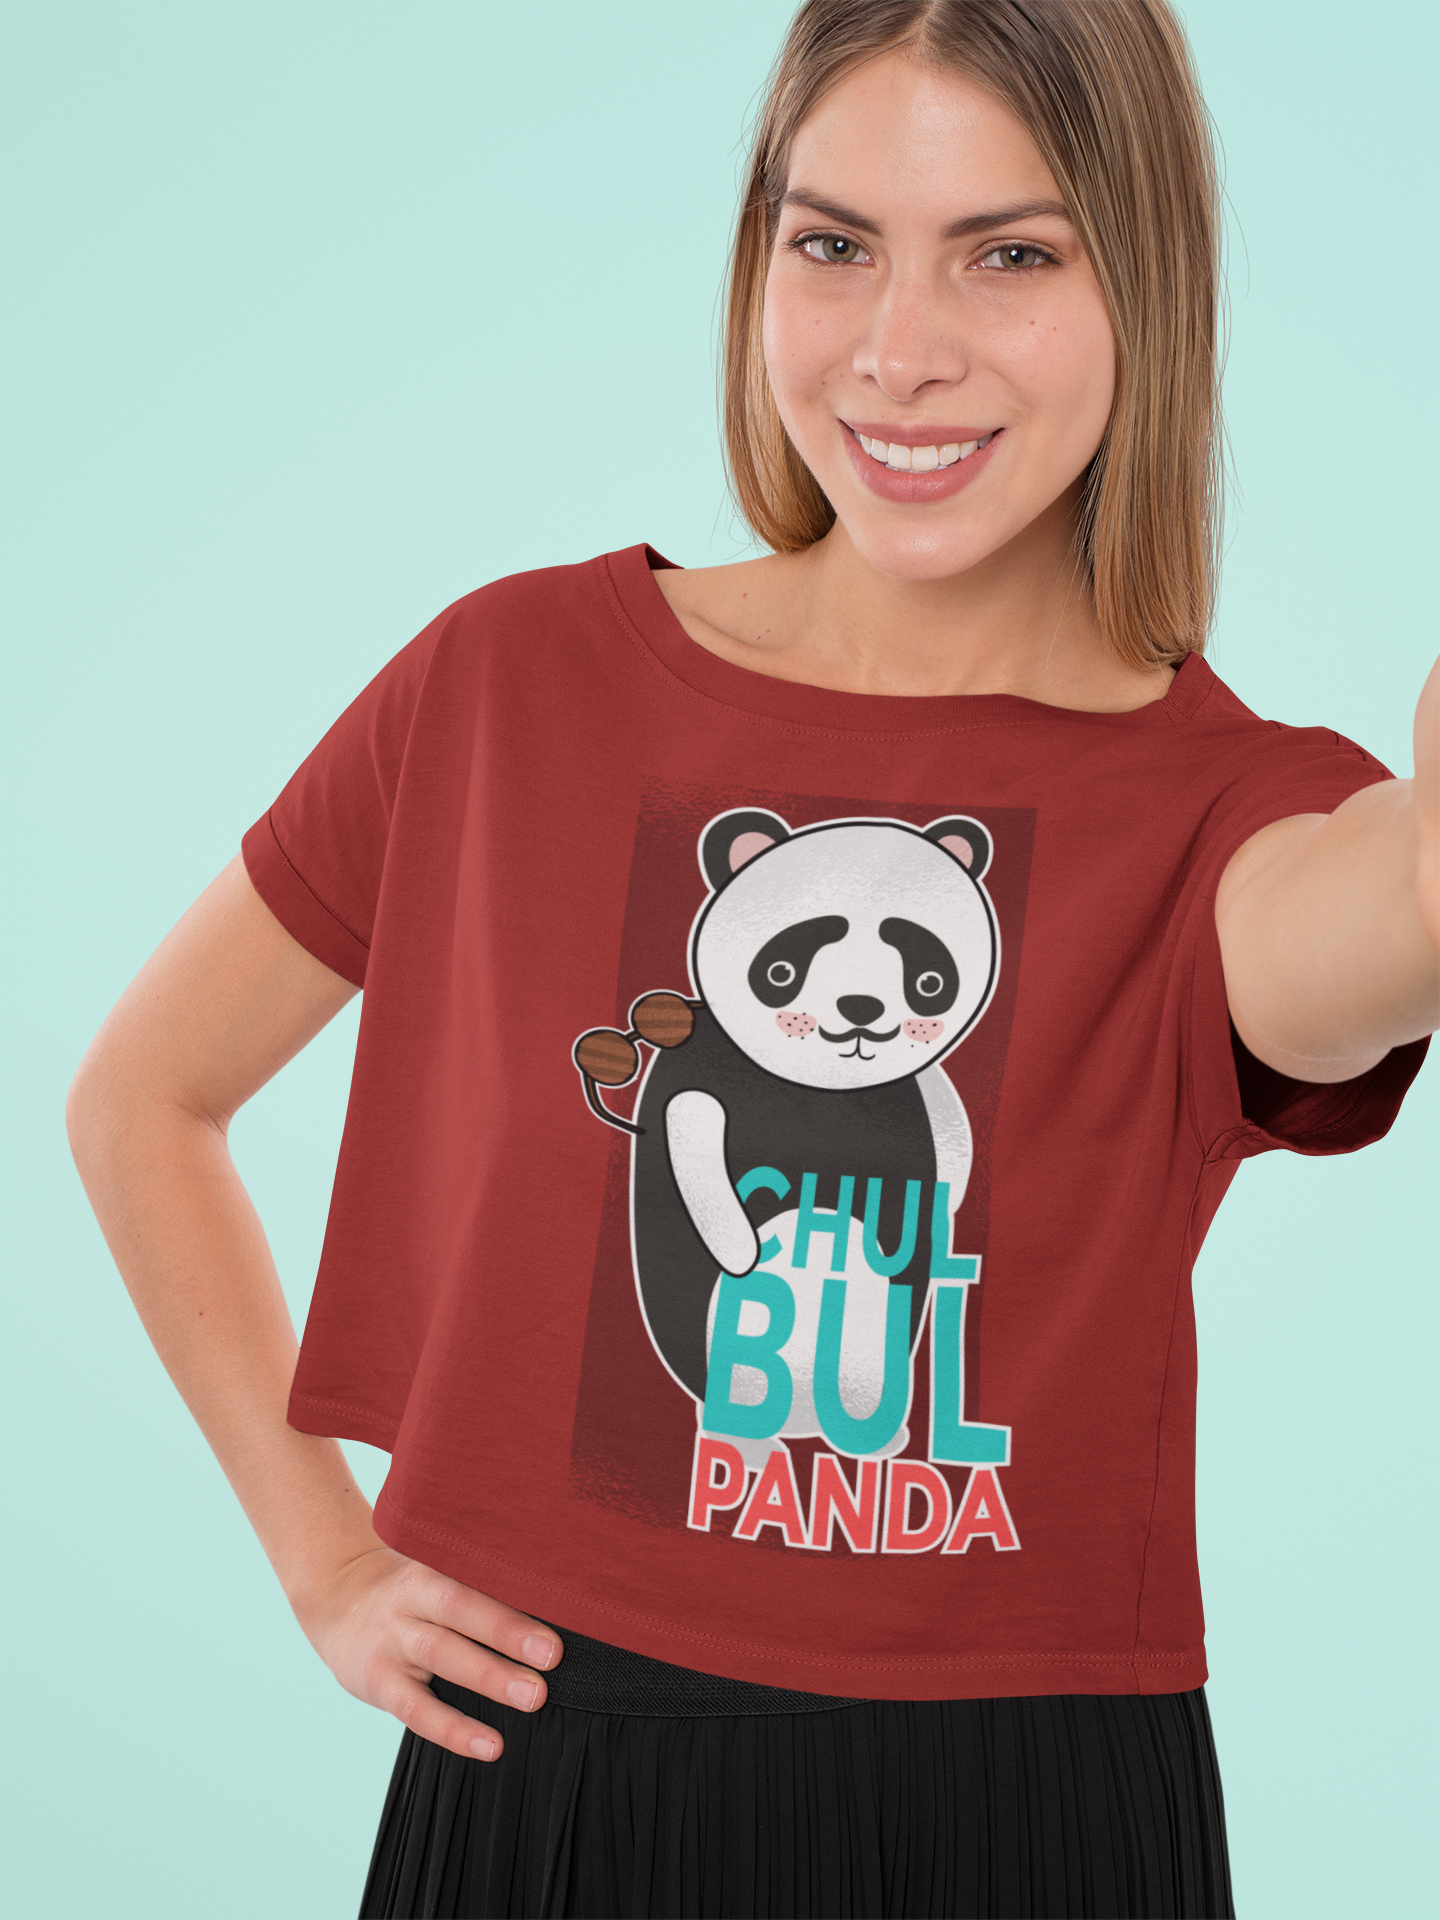 Chul bul panda Women Crop Top- FunkyTeesClub